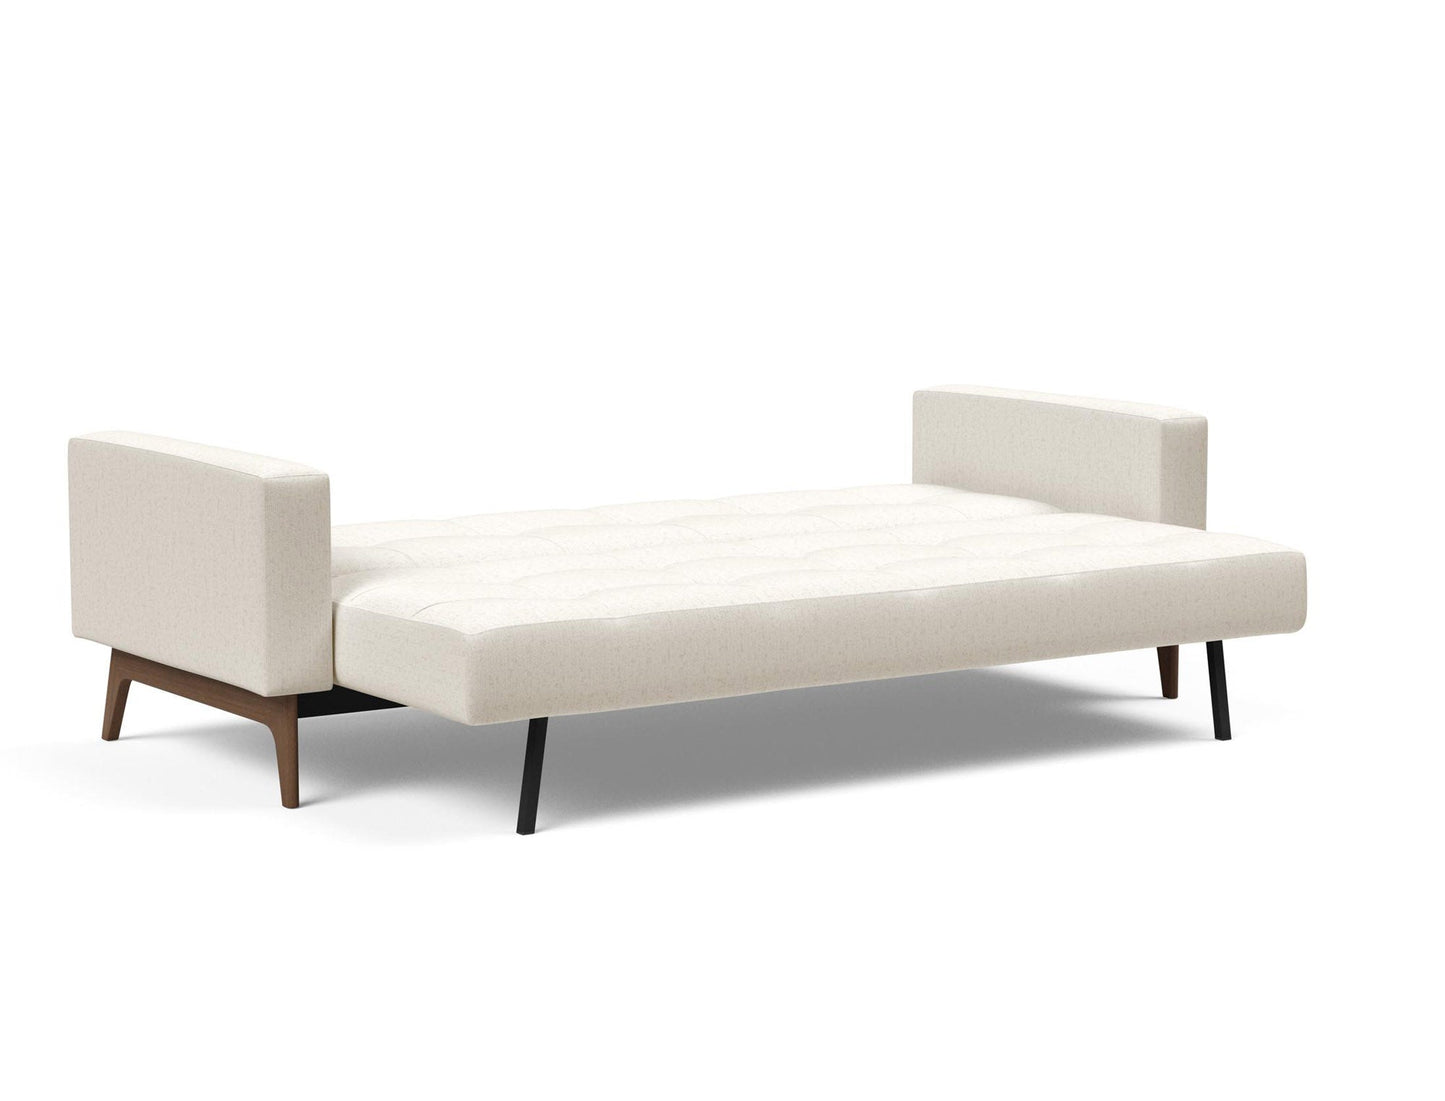 Innovation Living Living Cassius Quilt Sofa Bed Dark Wood Legs